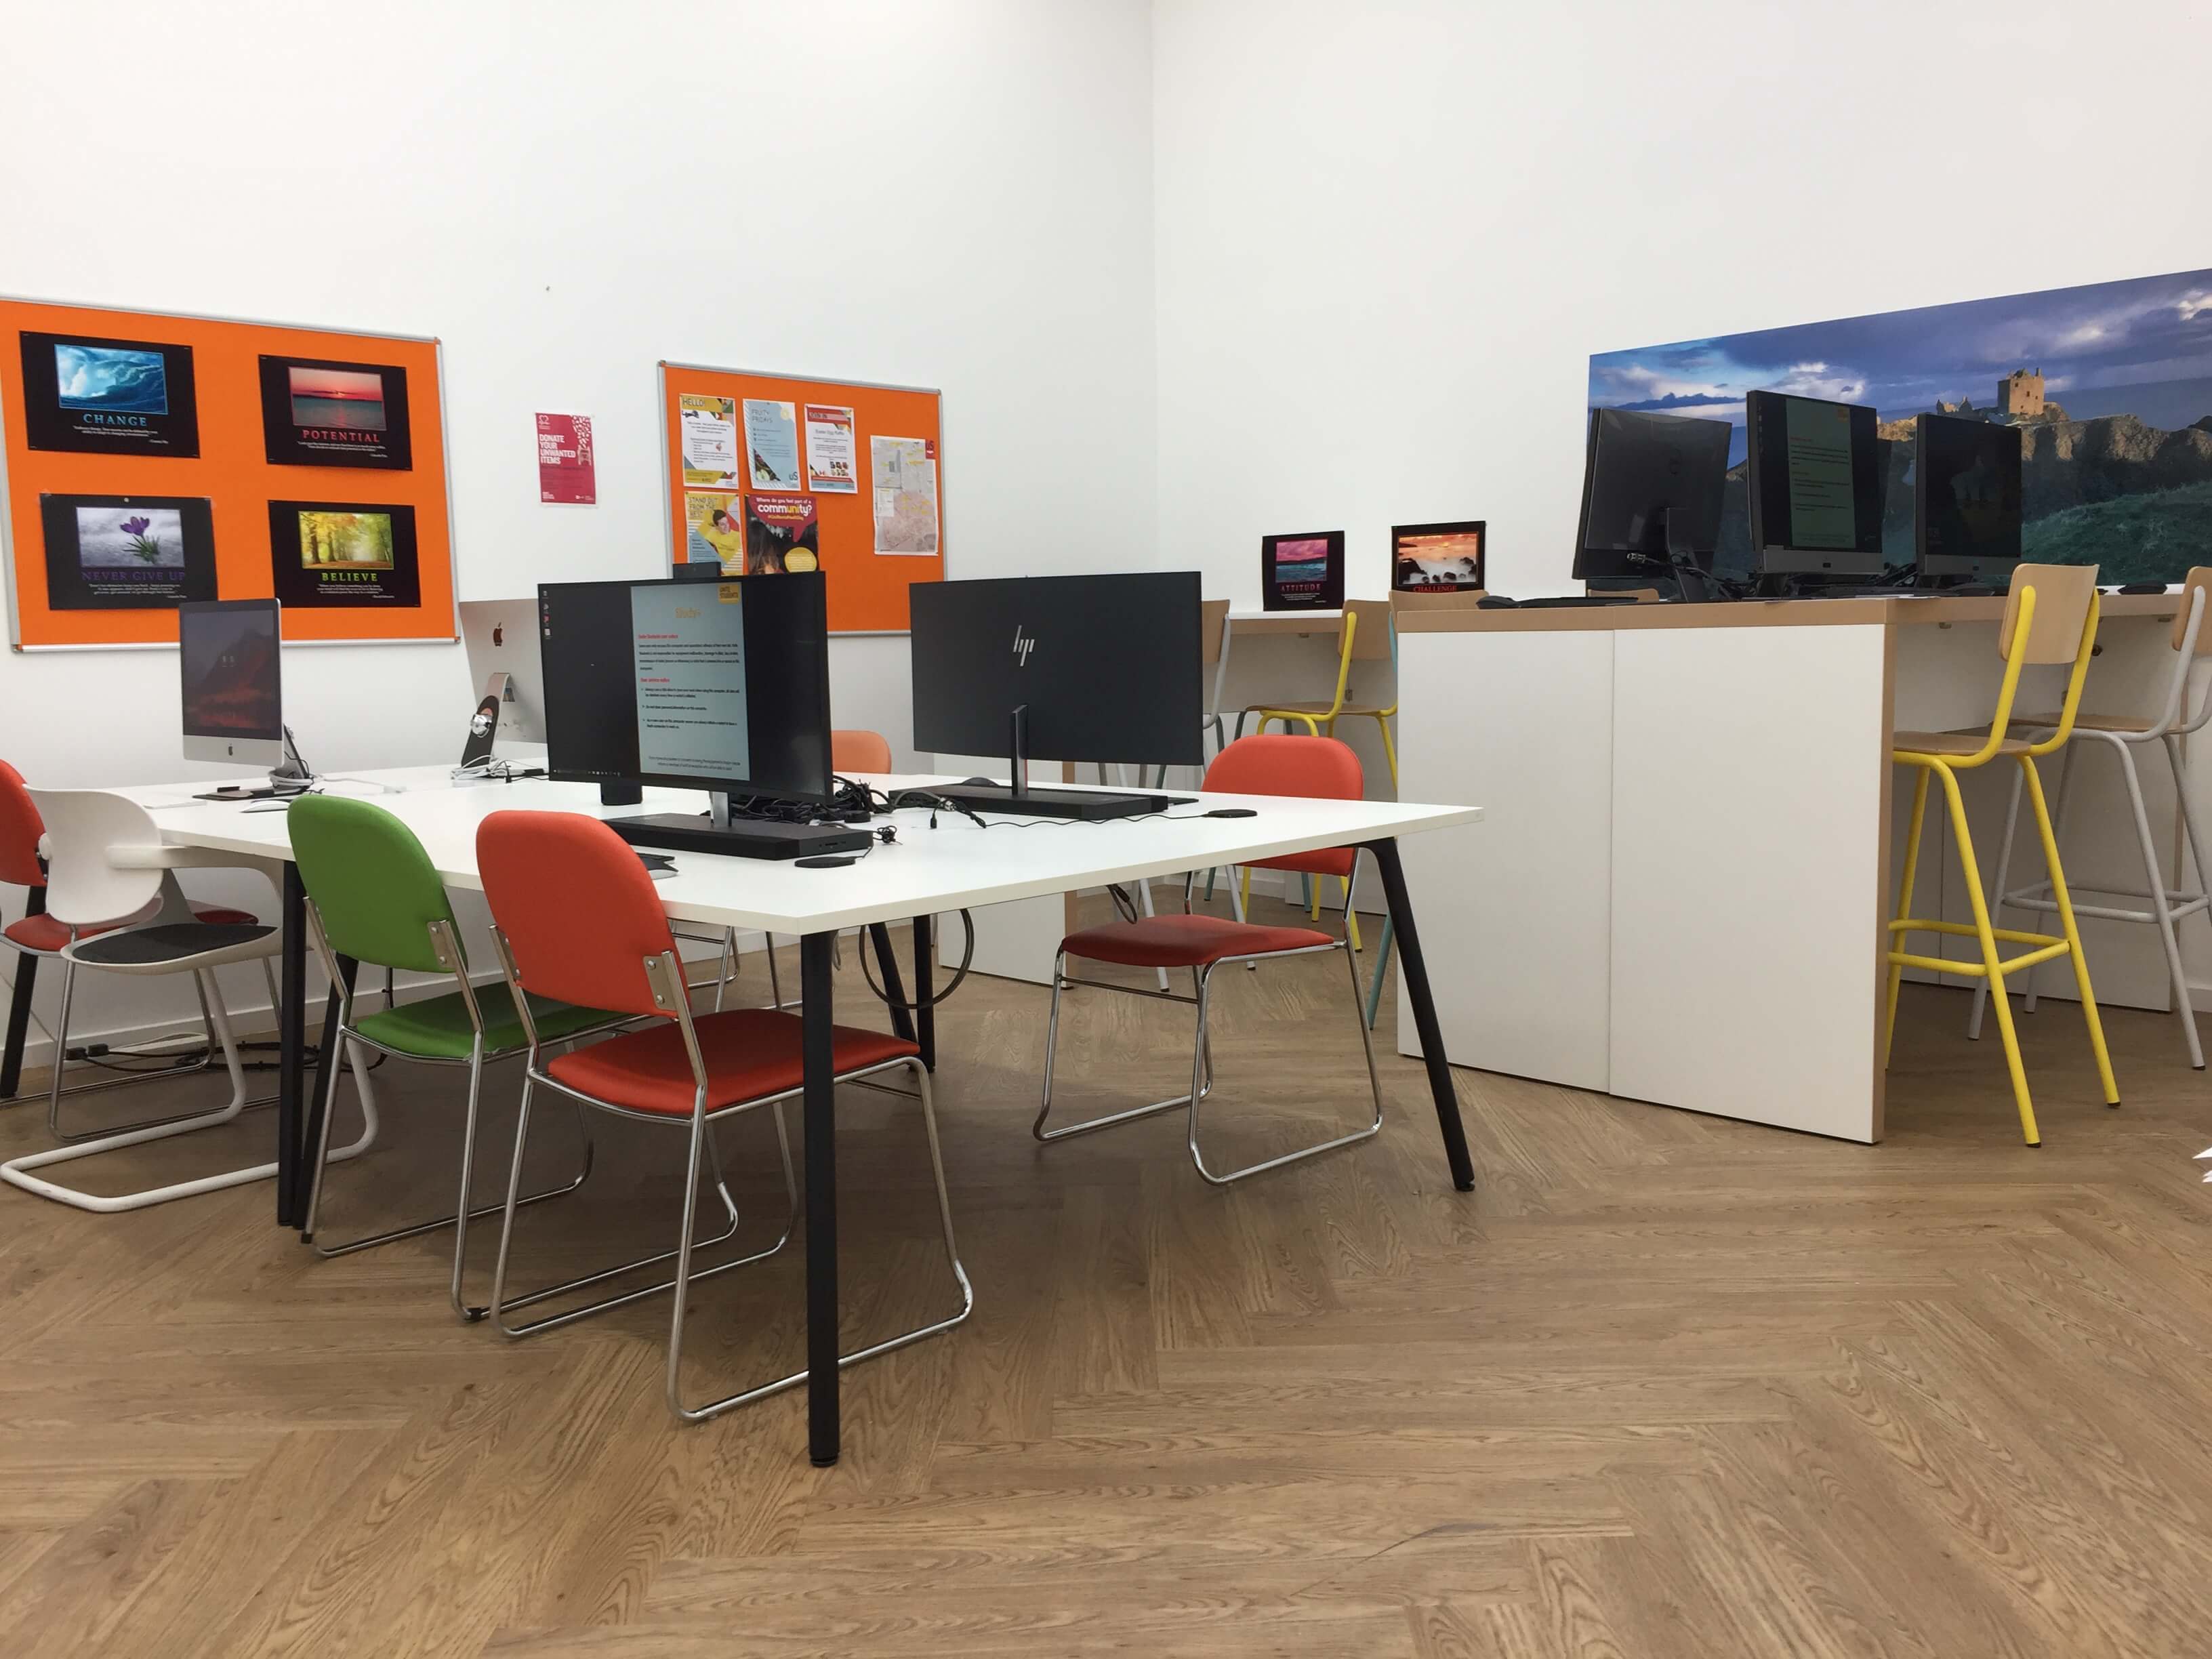 Study+ centre desks and computers